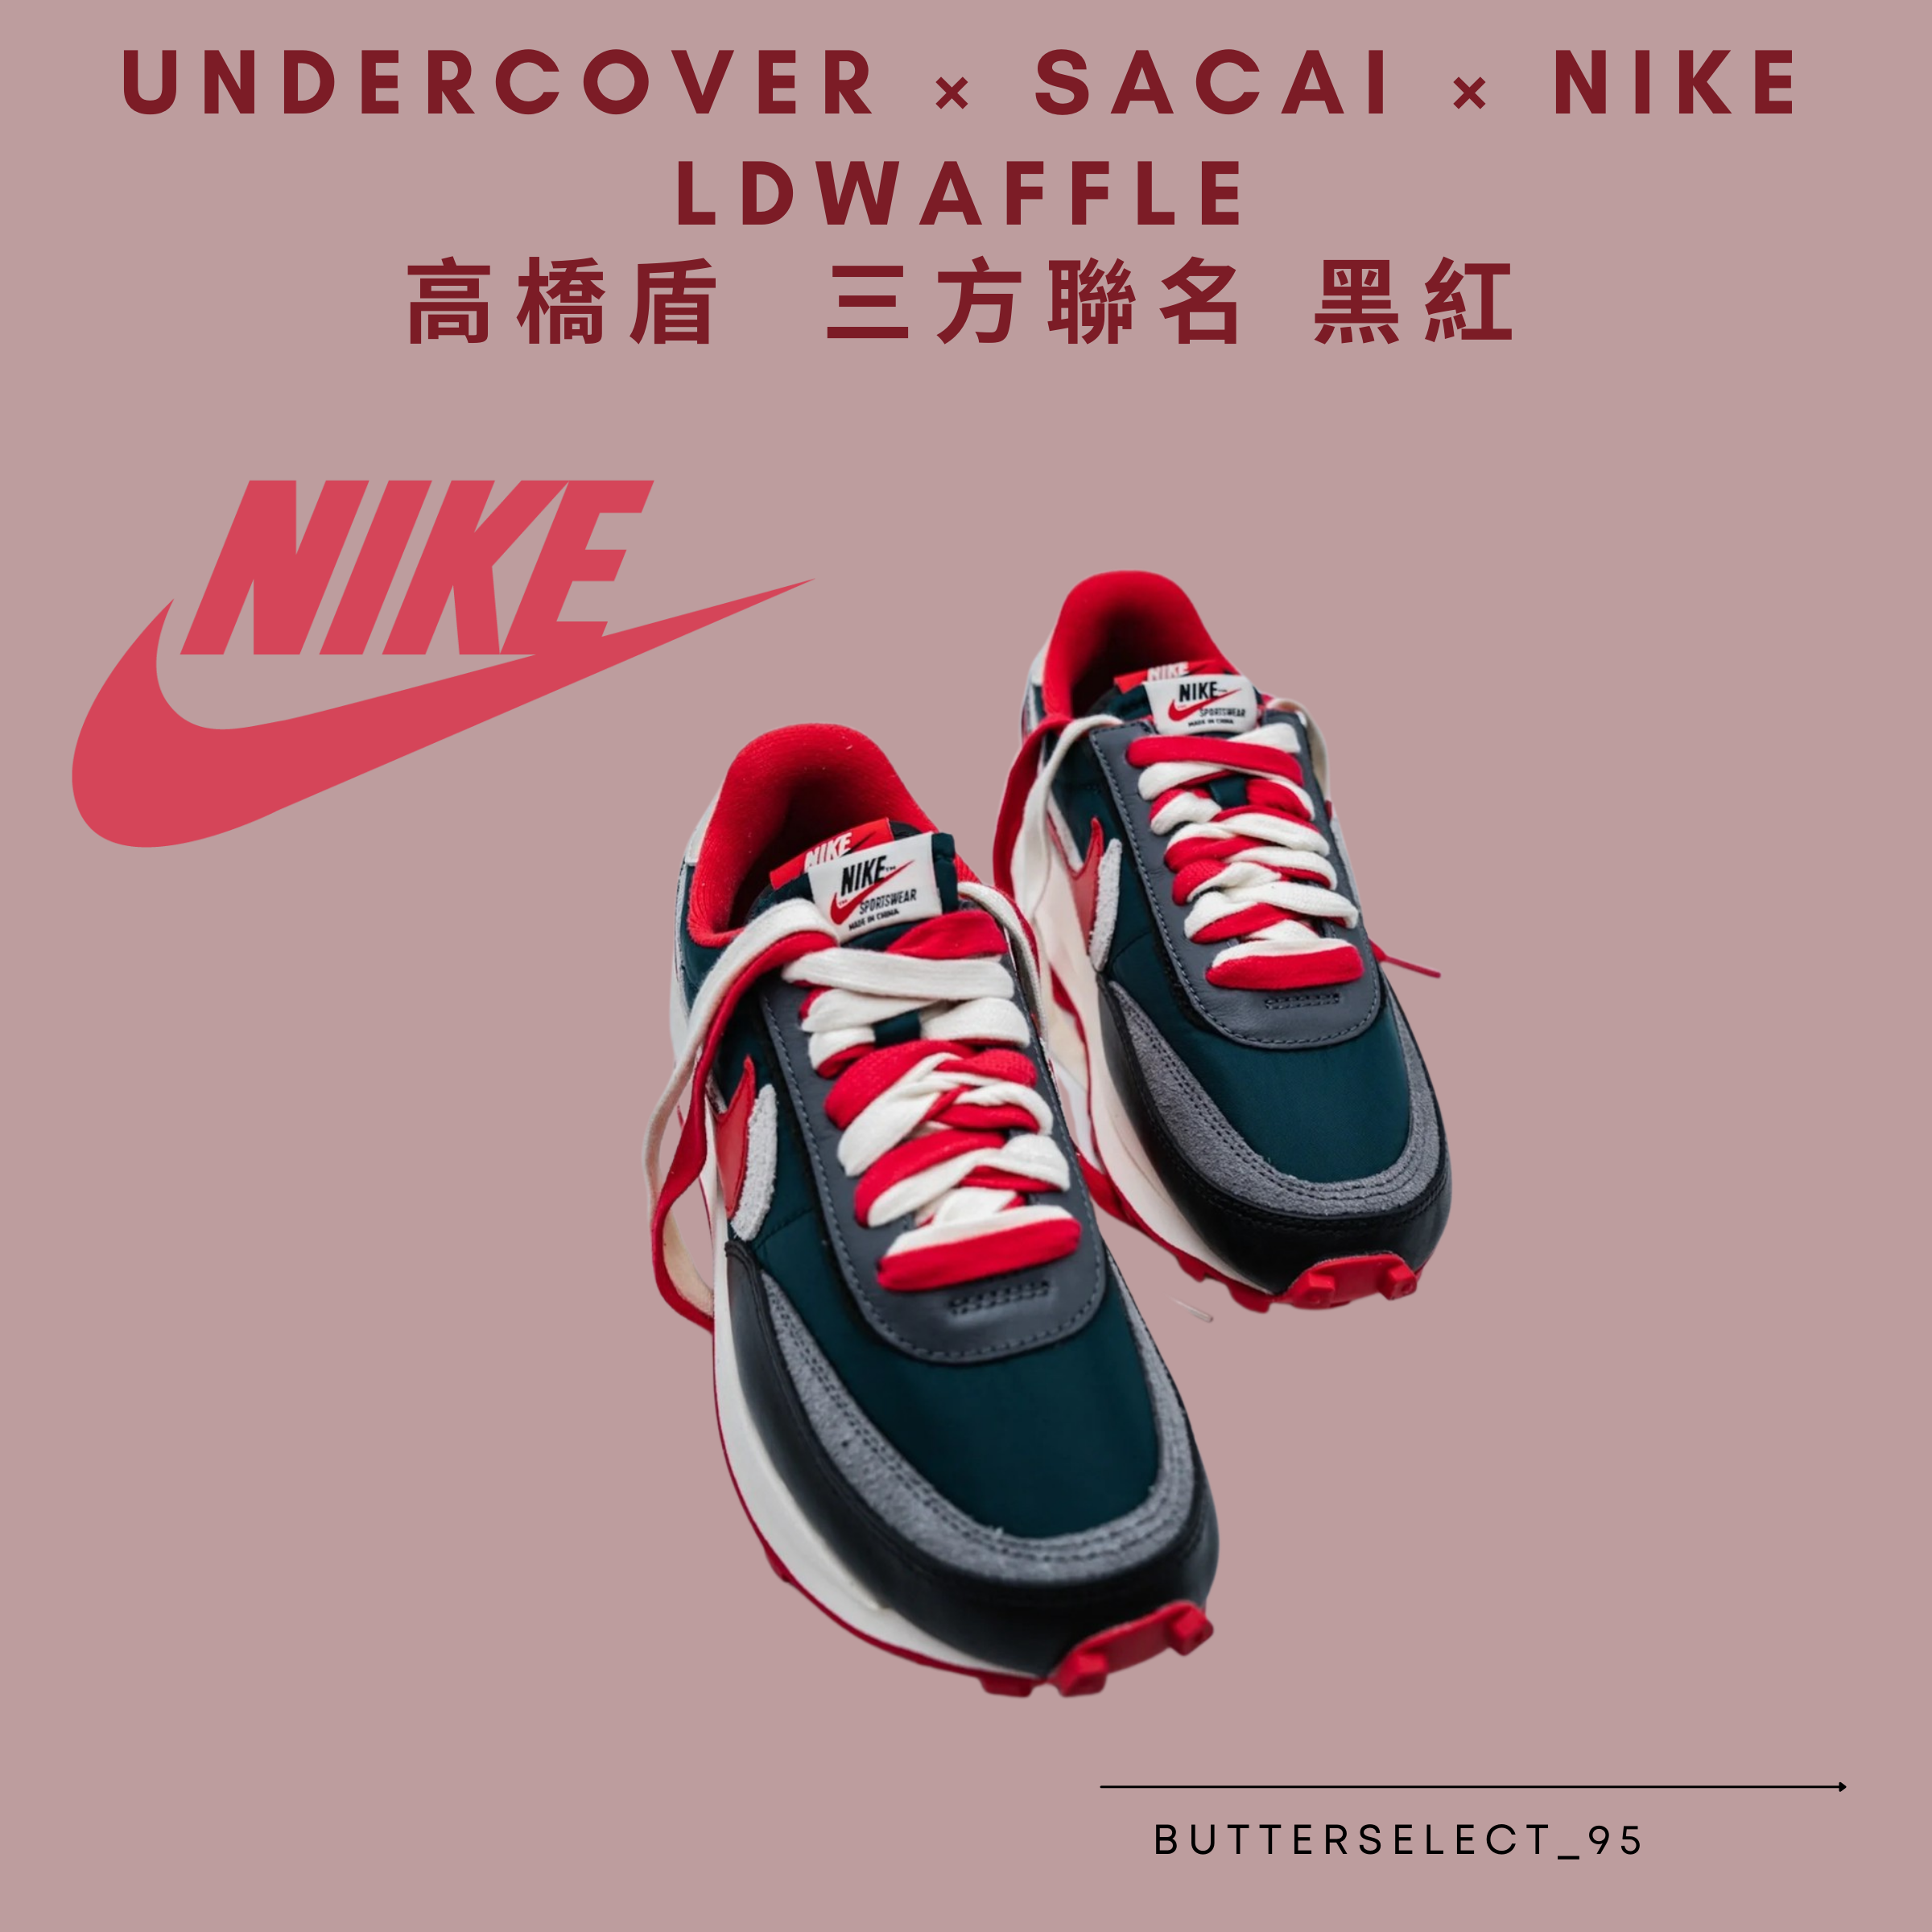 UNDERCOVER × SACAI x NIKE LDWAFFLE 高橋盾三方聯名黑紅| Nike